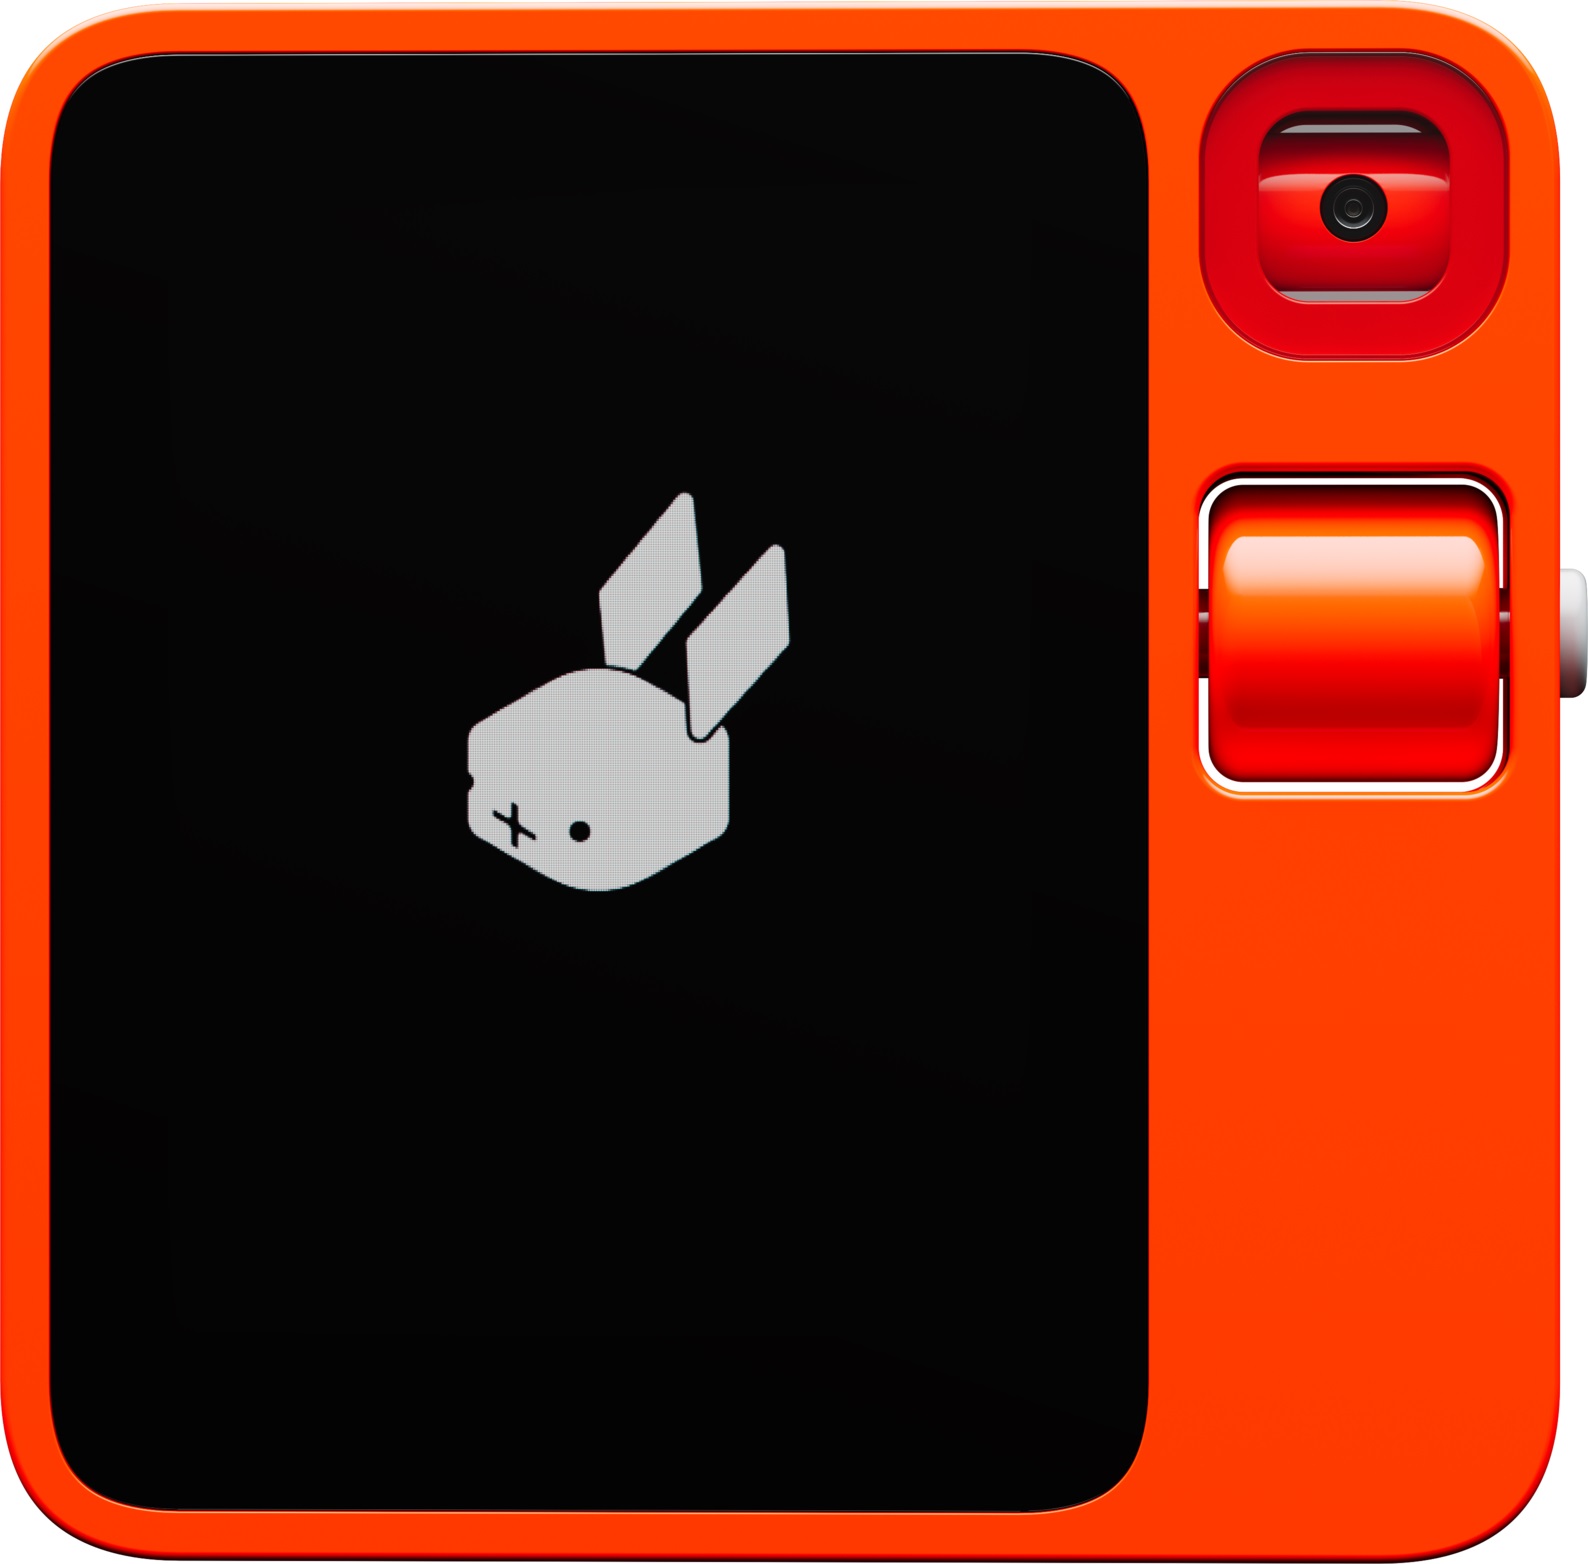 Rabbit R1, czyli asystent AI (źródło: Rabbit)